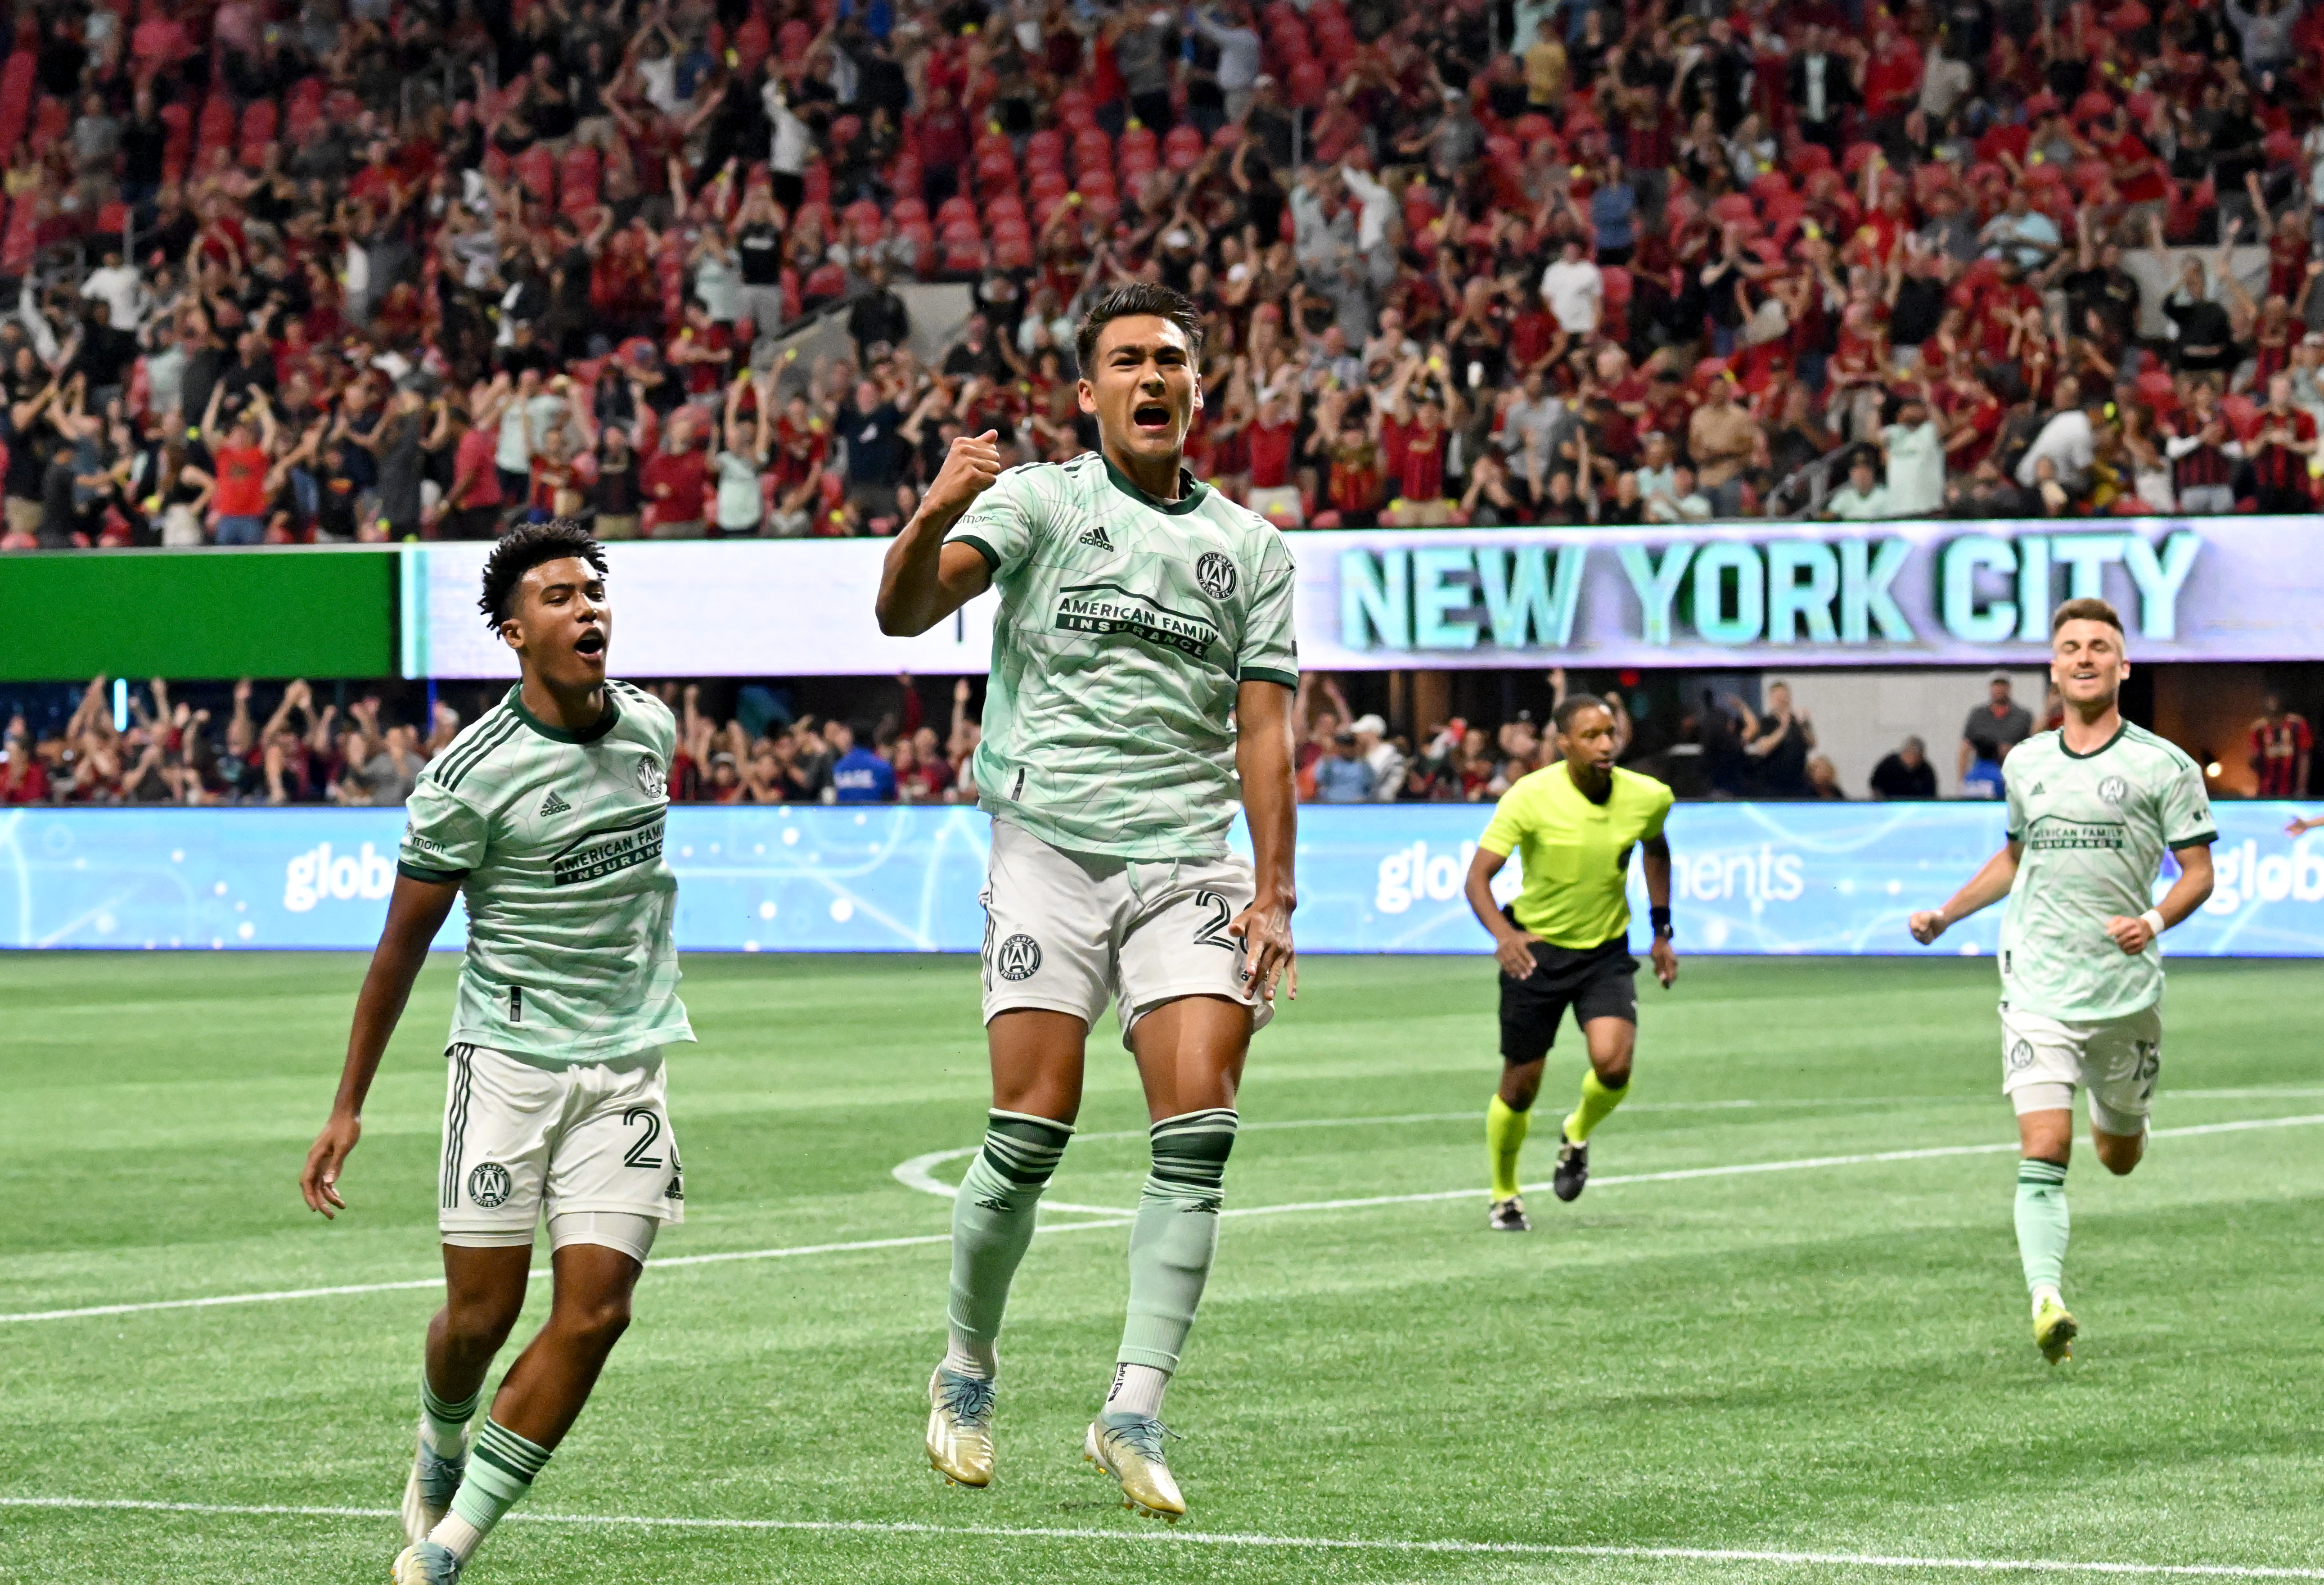 Atlanta United ends unbeaten streak with 4-0 defeat at New York